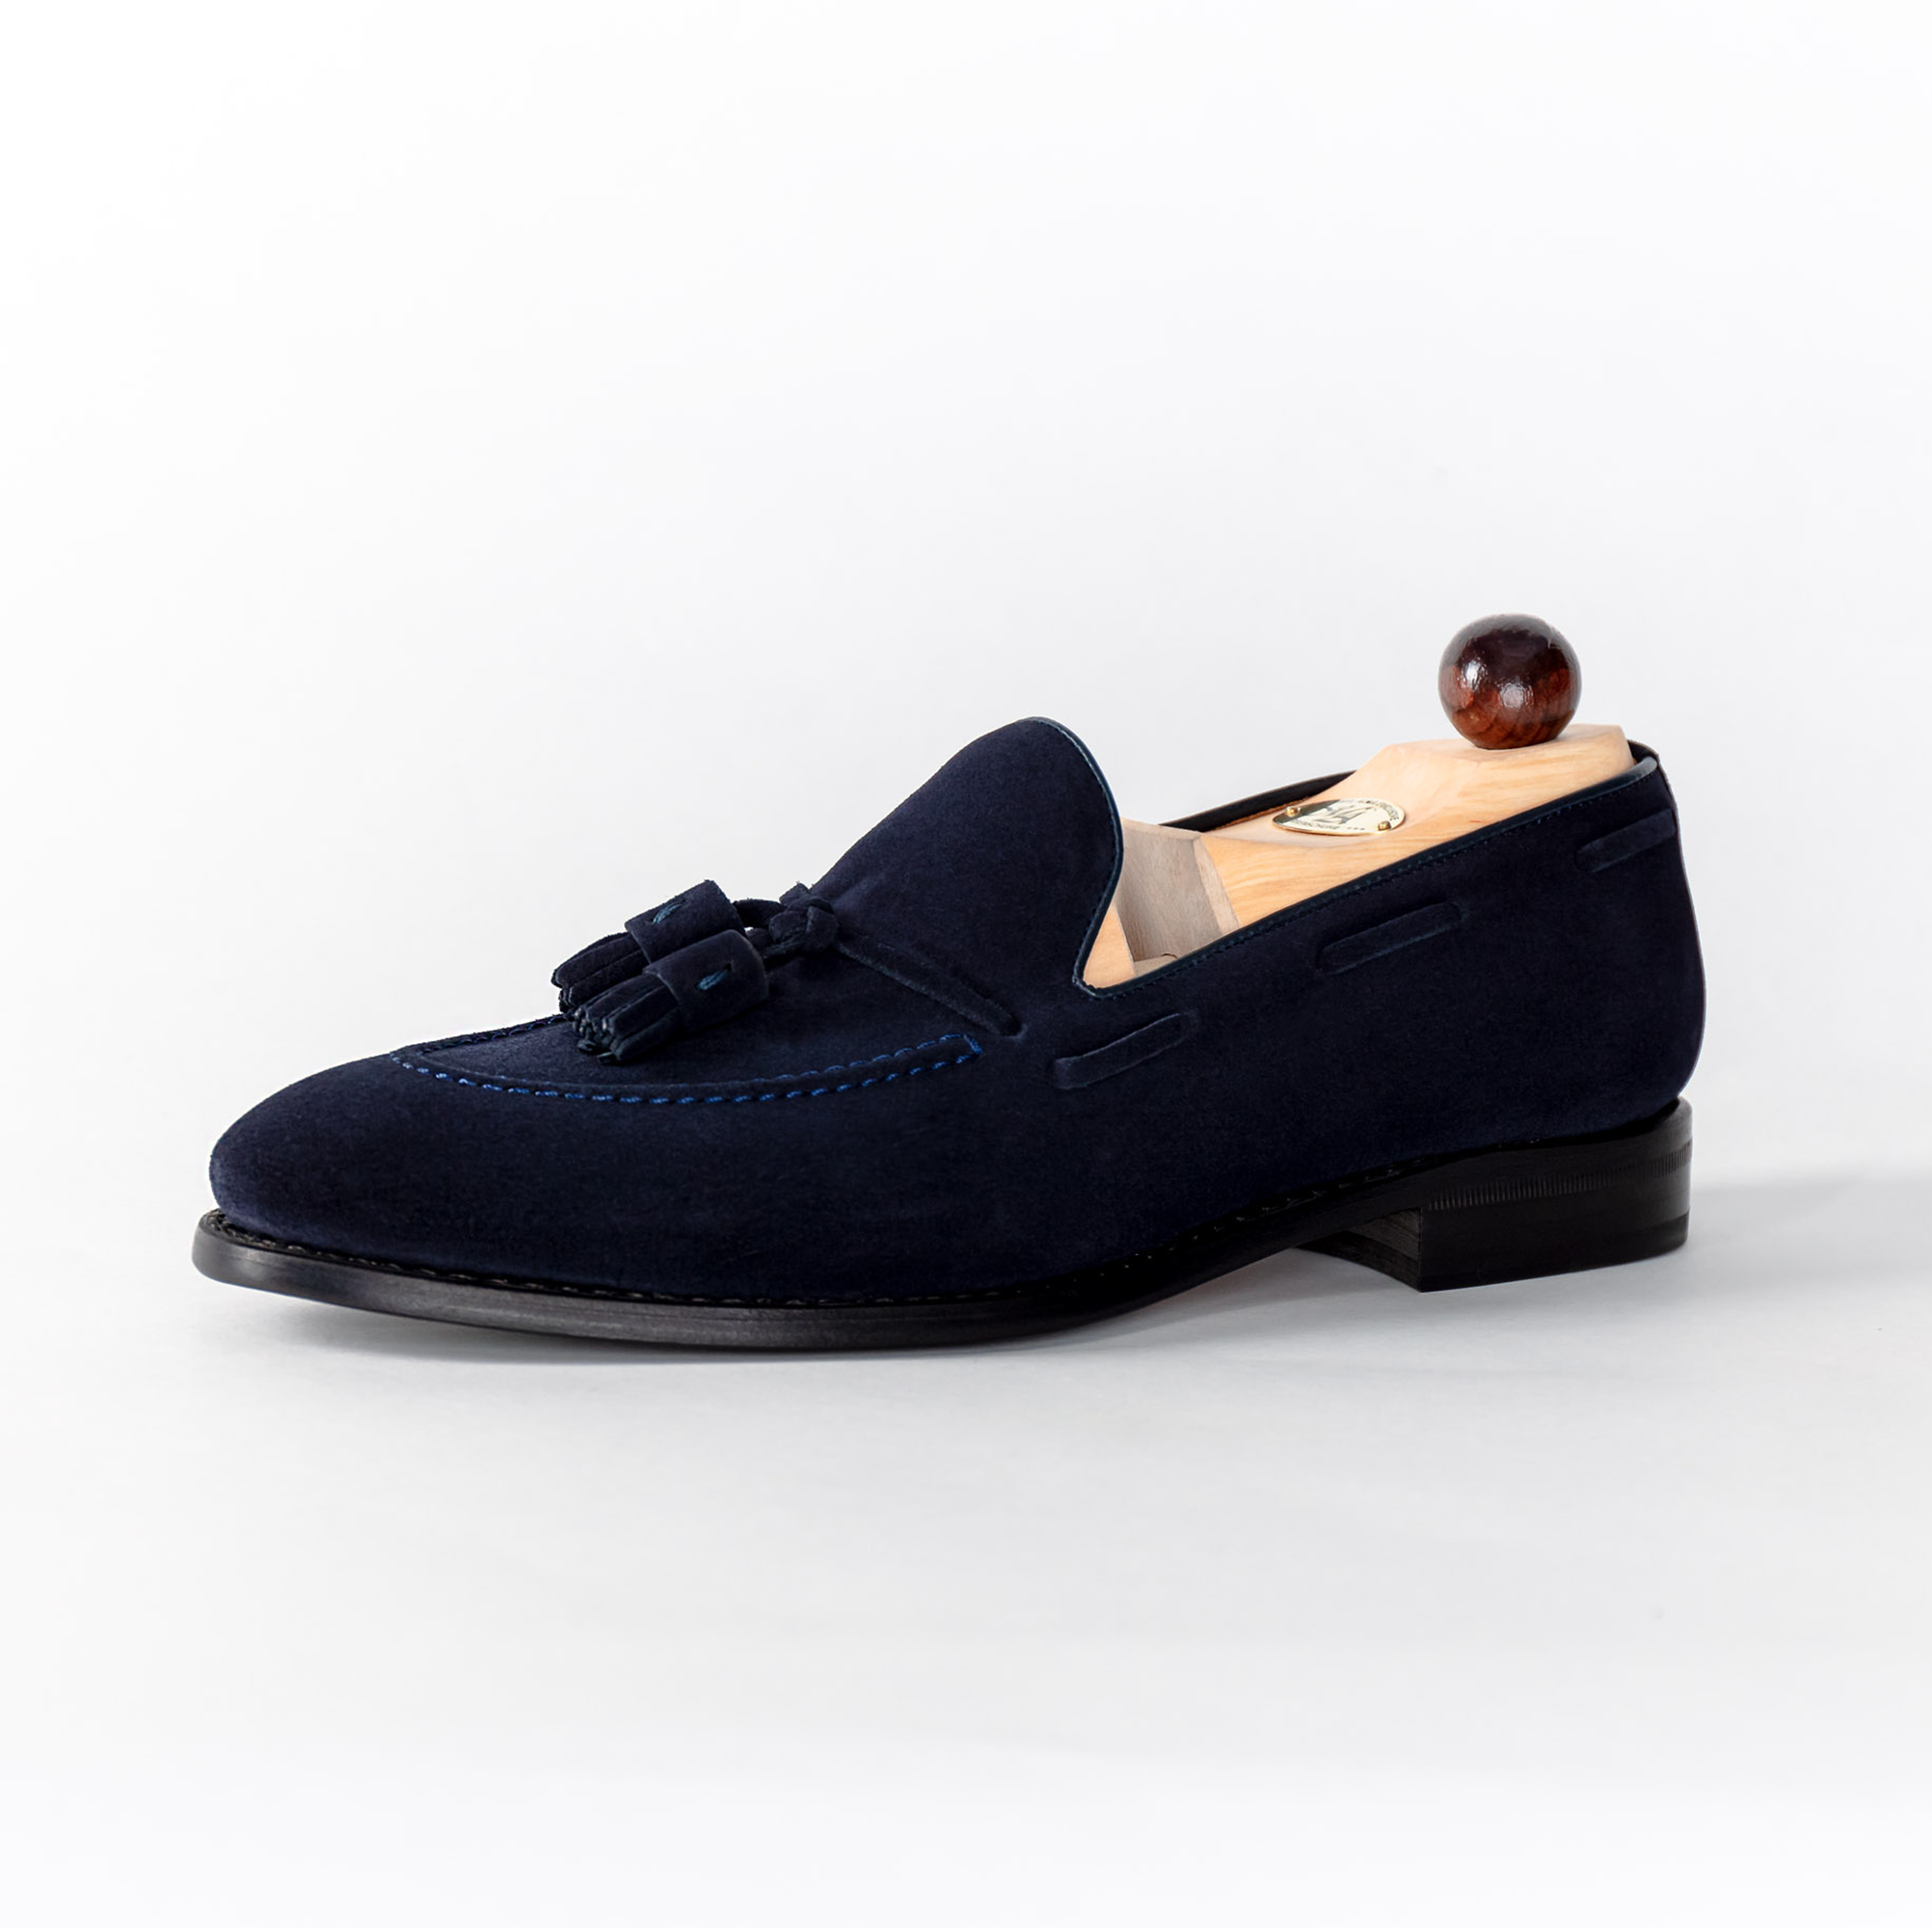 Tasselloafer Blau - Michael & Albina Exklusive Schuhe - Online Shop